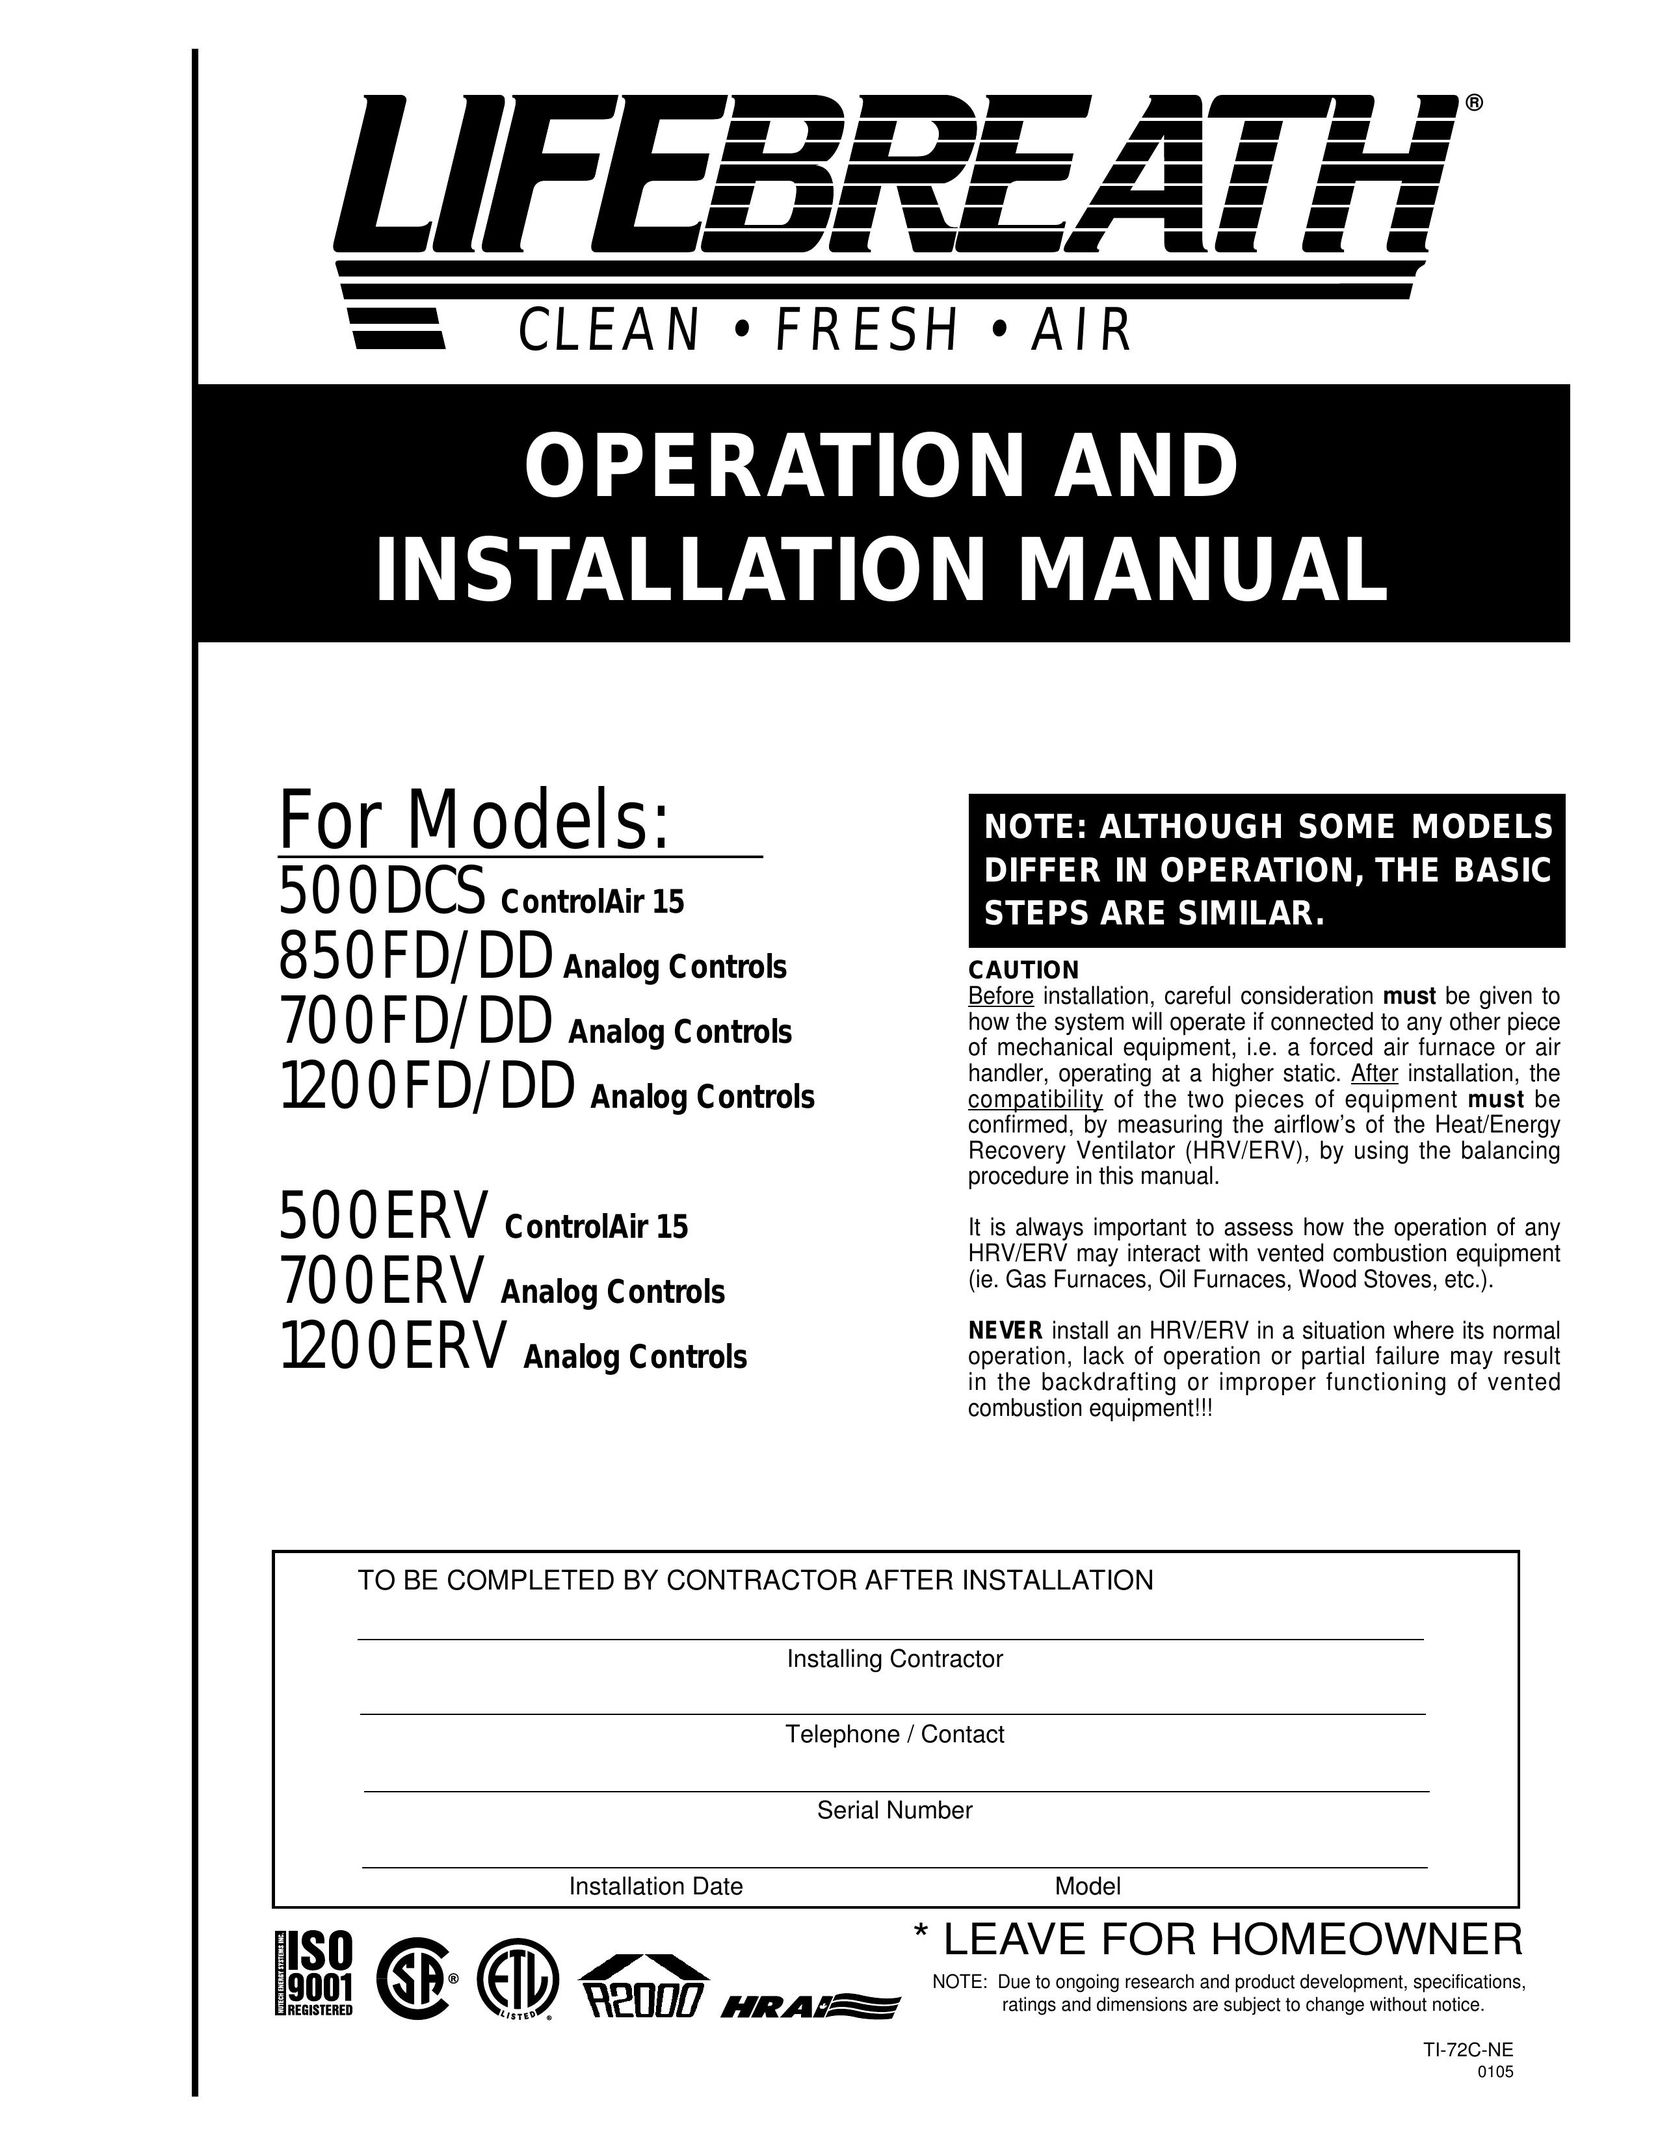 Lifebreath 1200FD/DD Air Cleaner User Manual